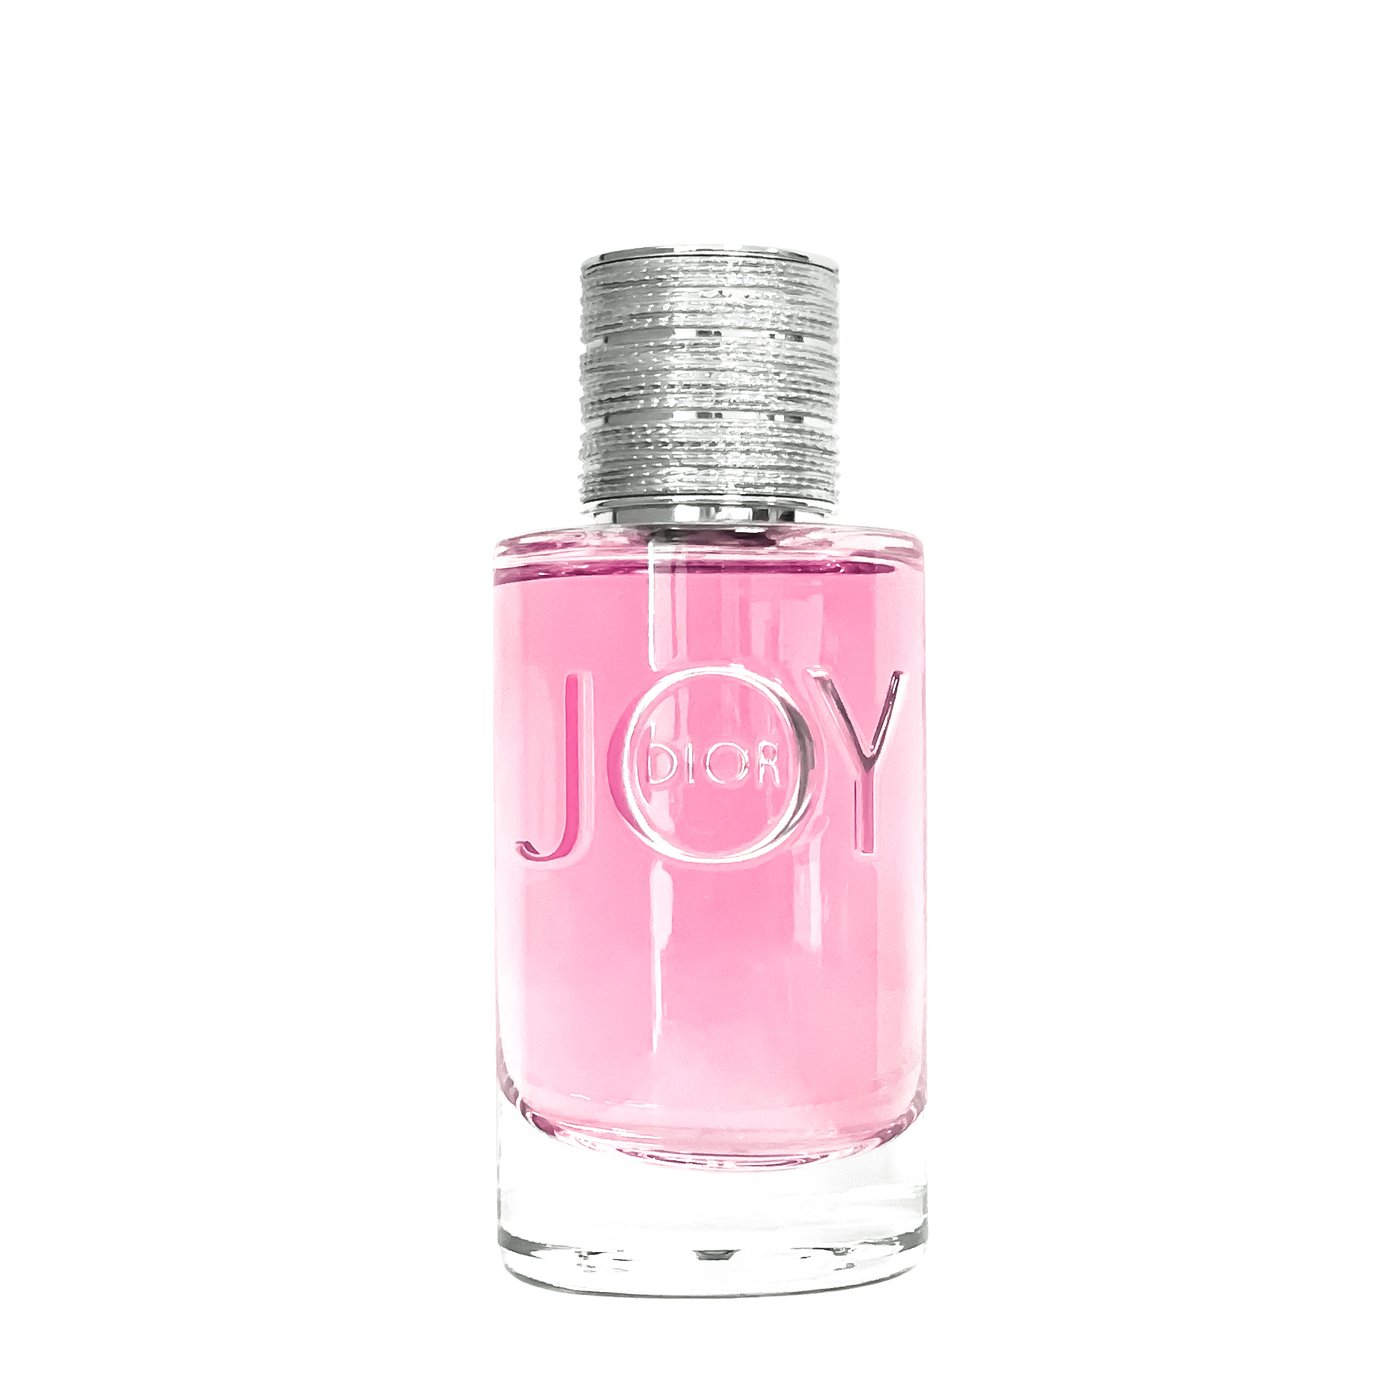 perfume dior joy, OFF 70%,welcome to buy!